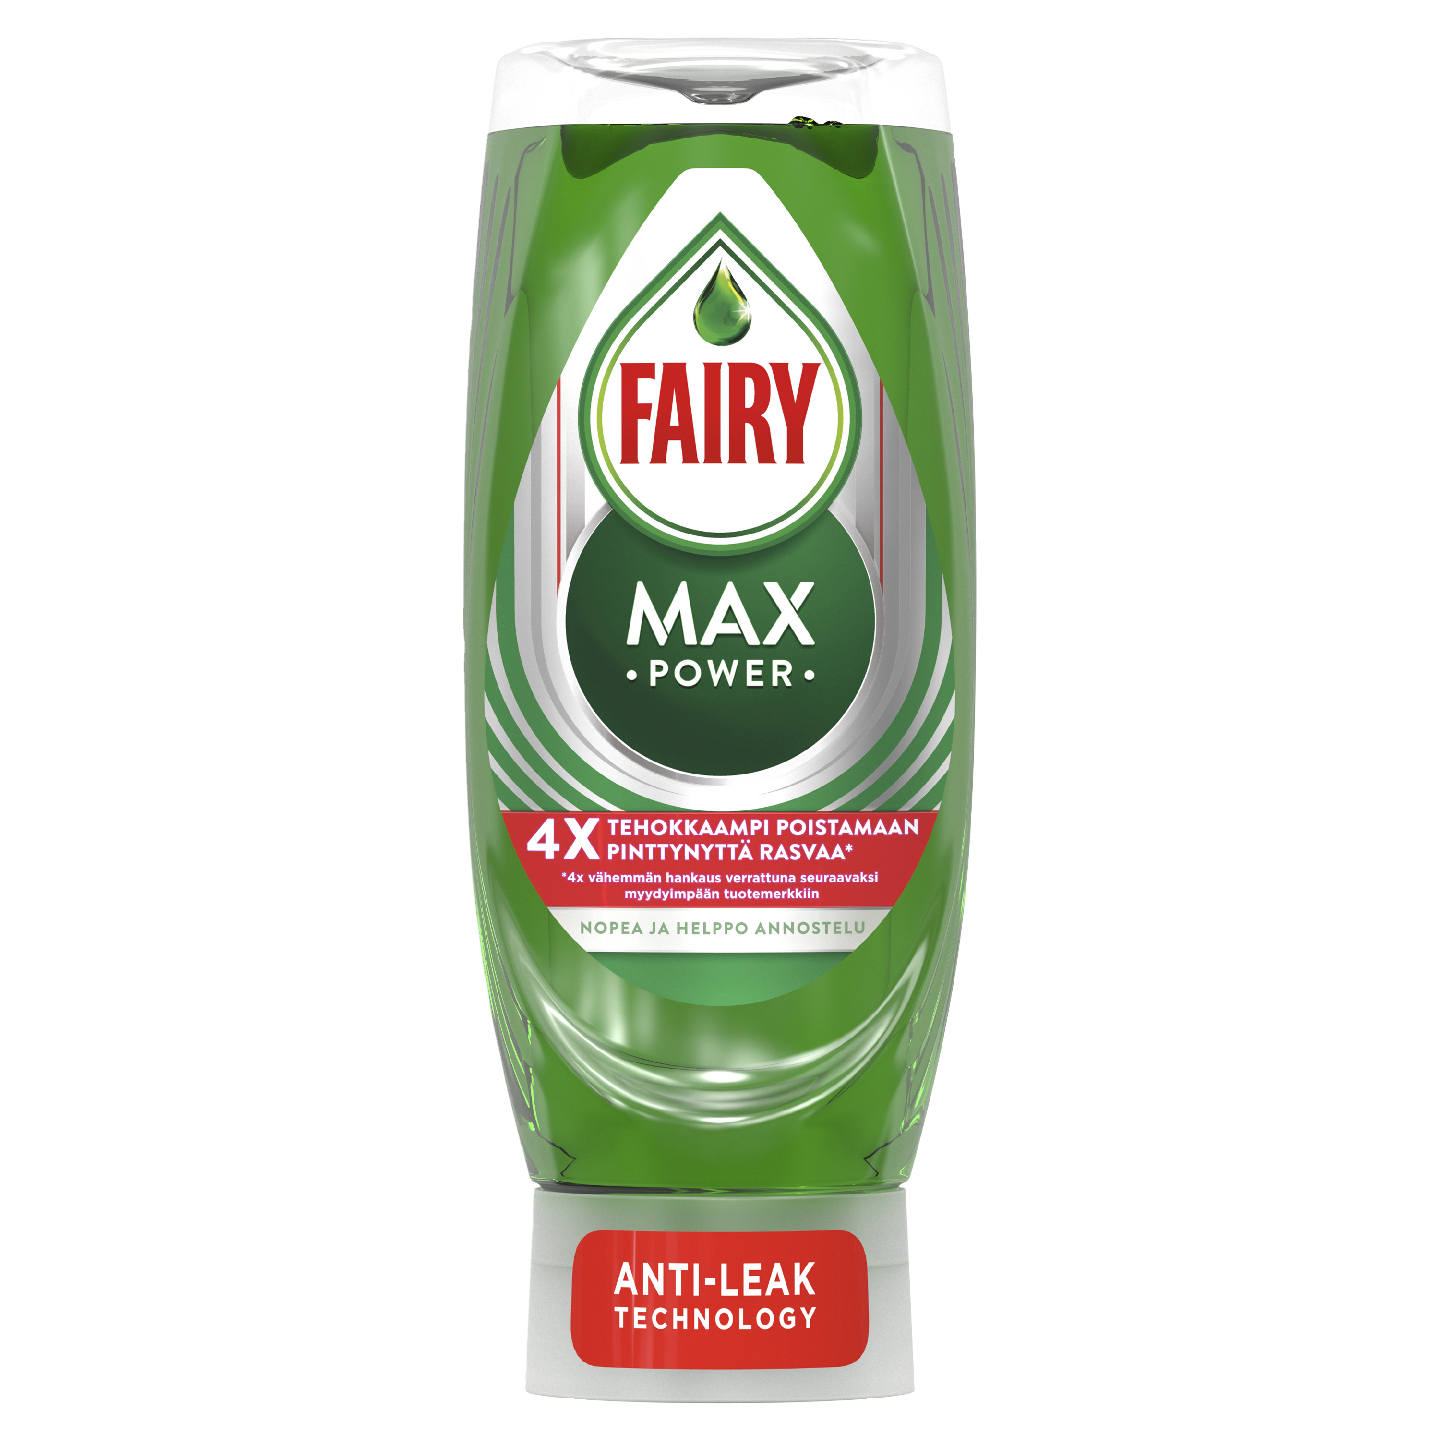 Fairy Max Power astianpesuaine 450ml Original